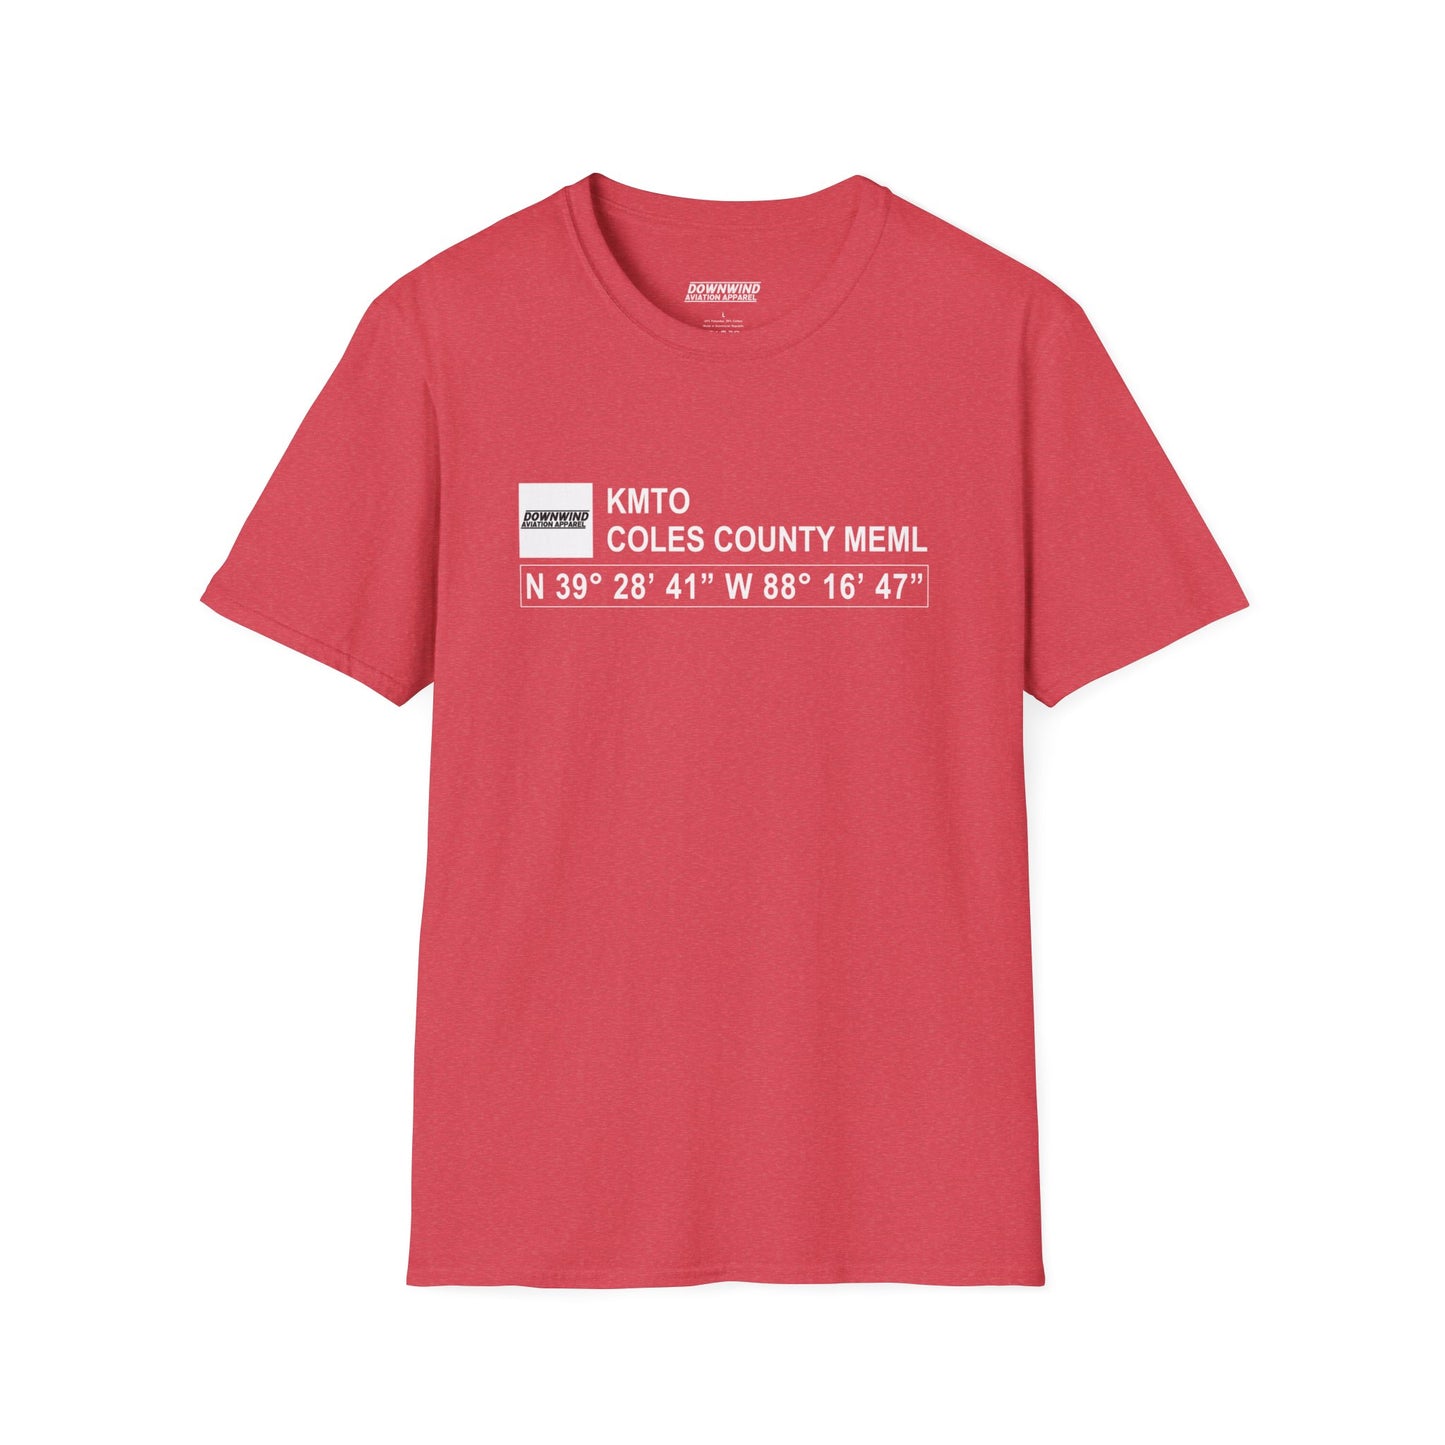 KMTO / Coles County Meml T-Shirt